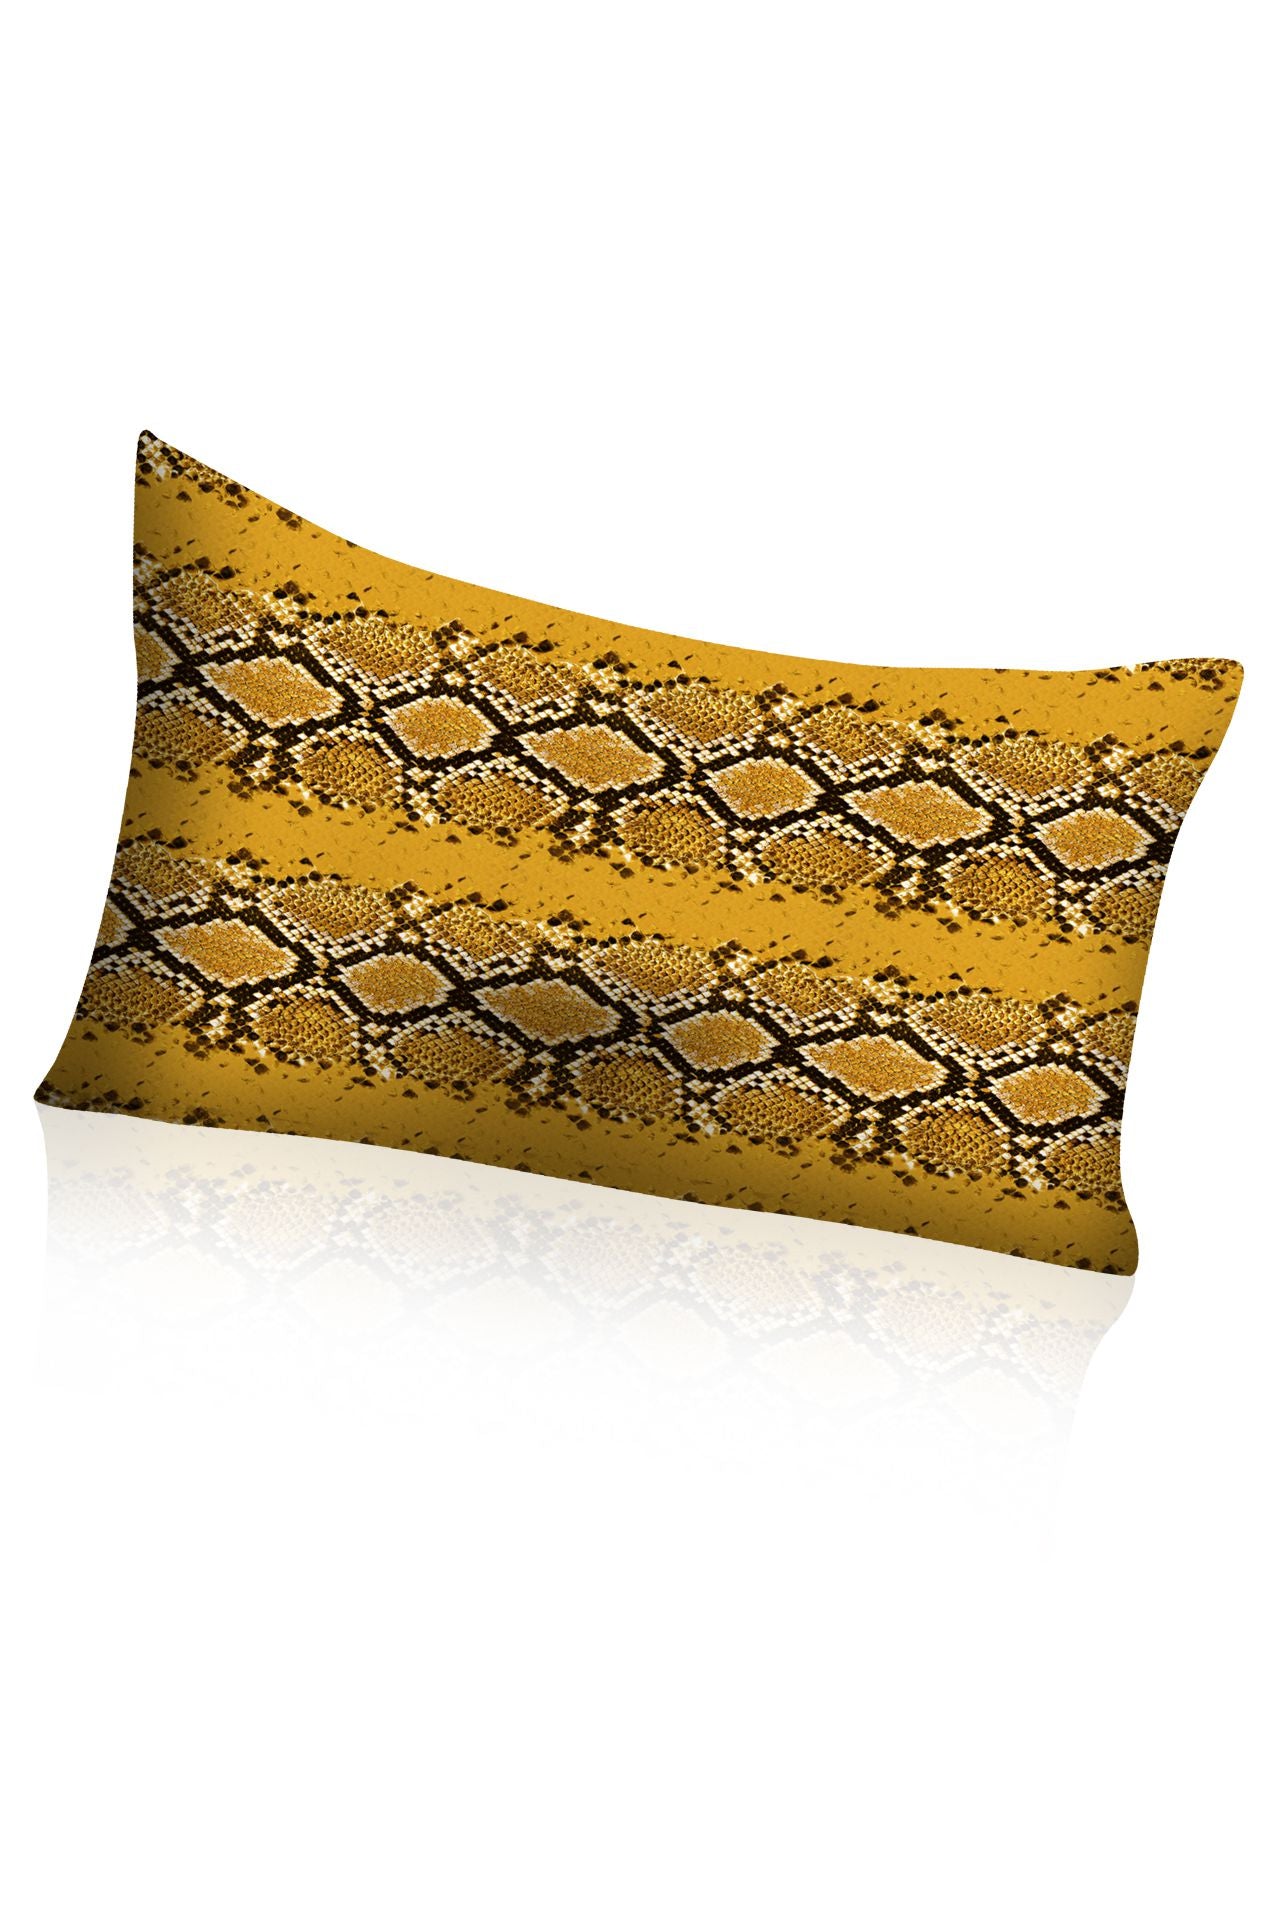 Vegan Silk Pillow Cover Made with Cupro